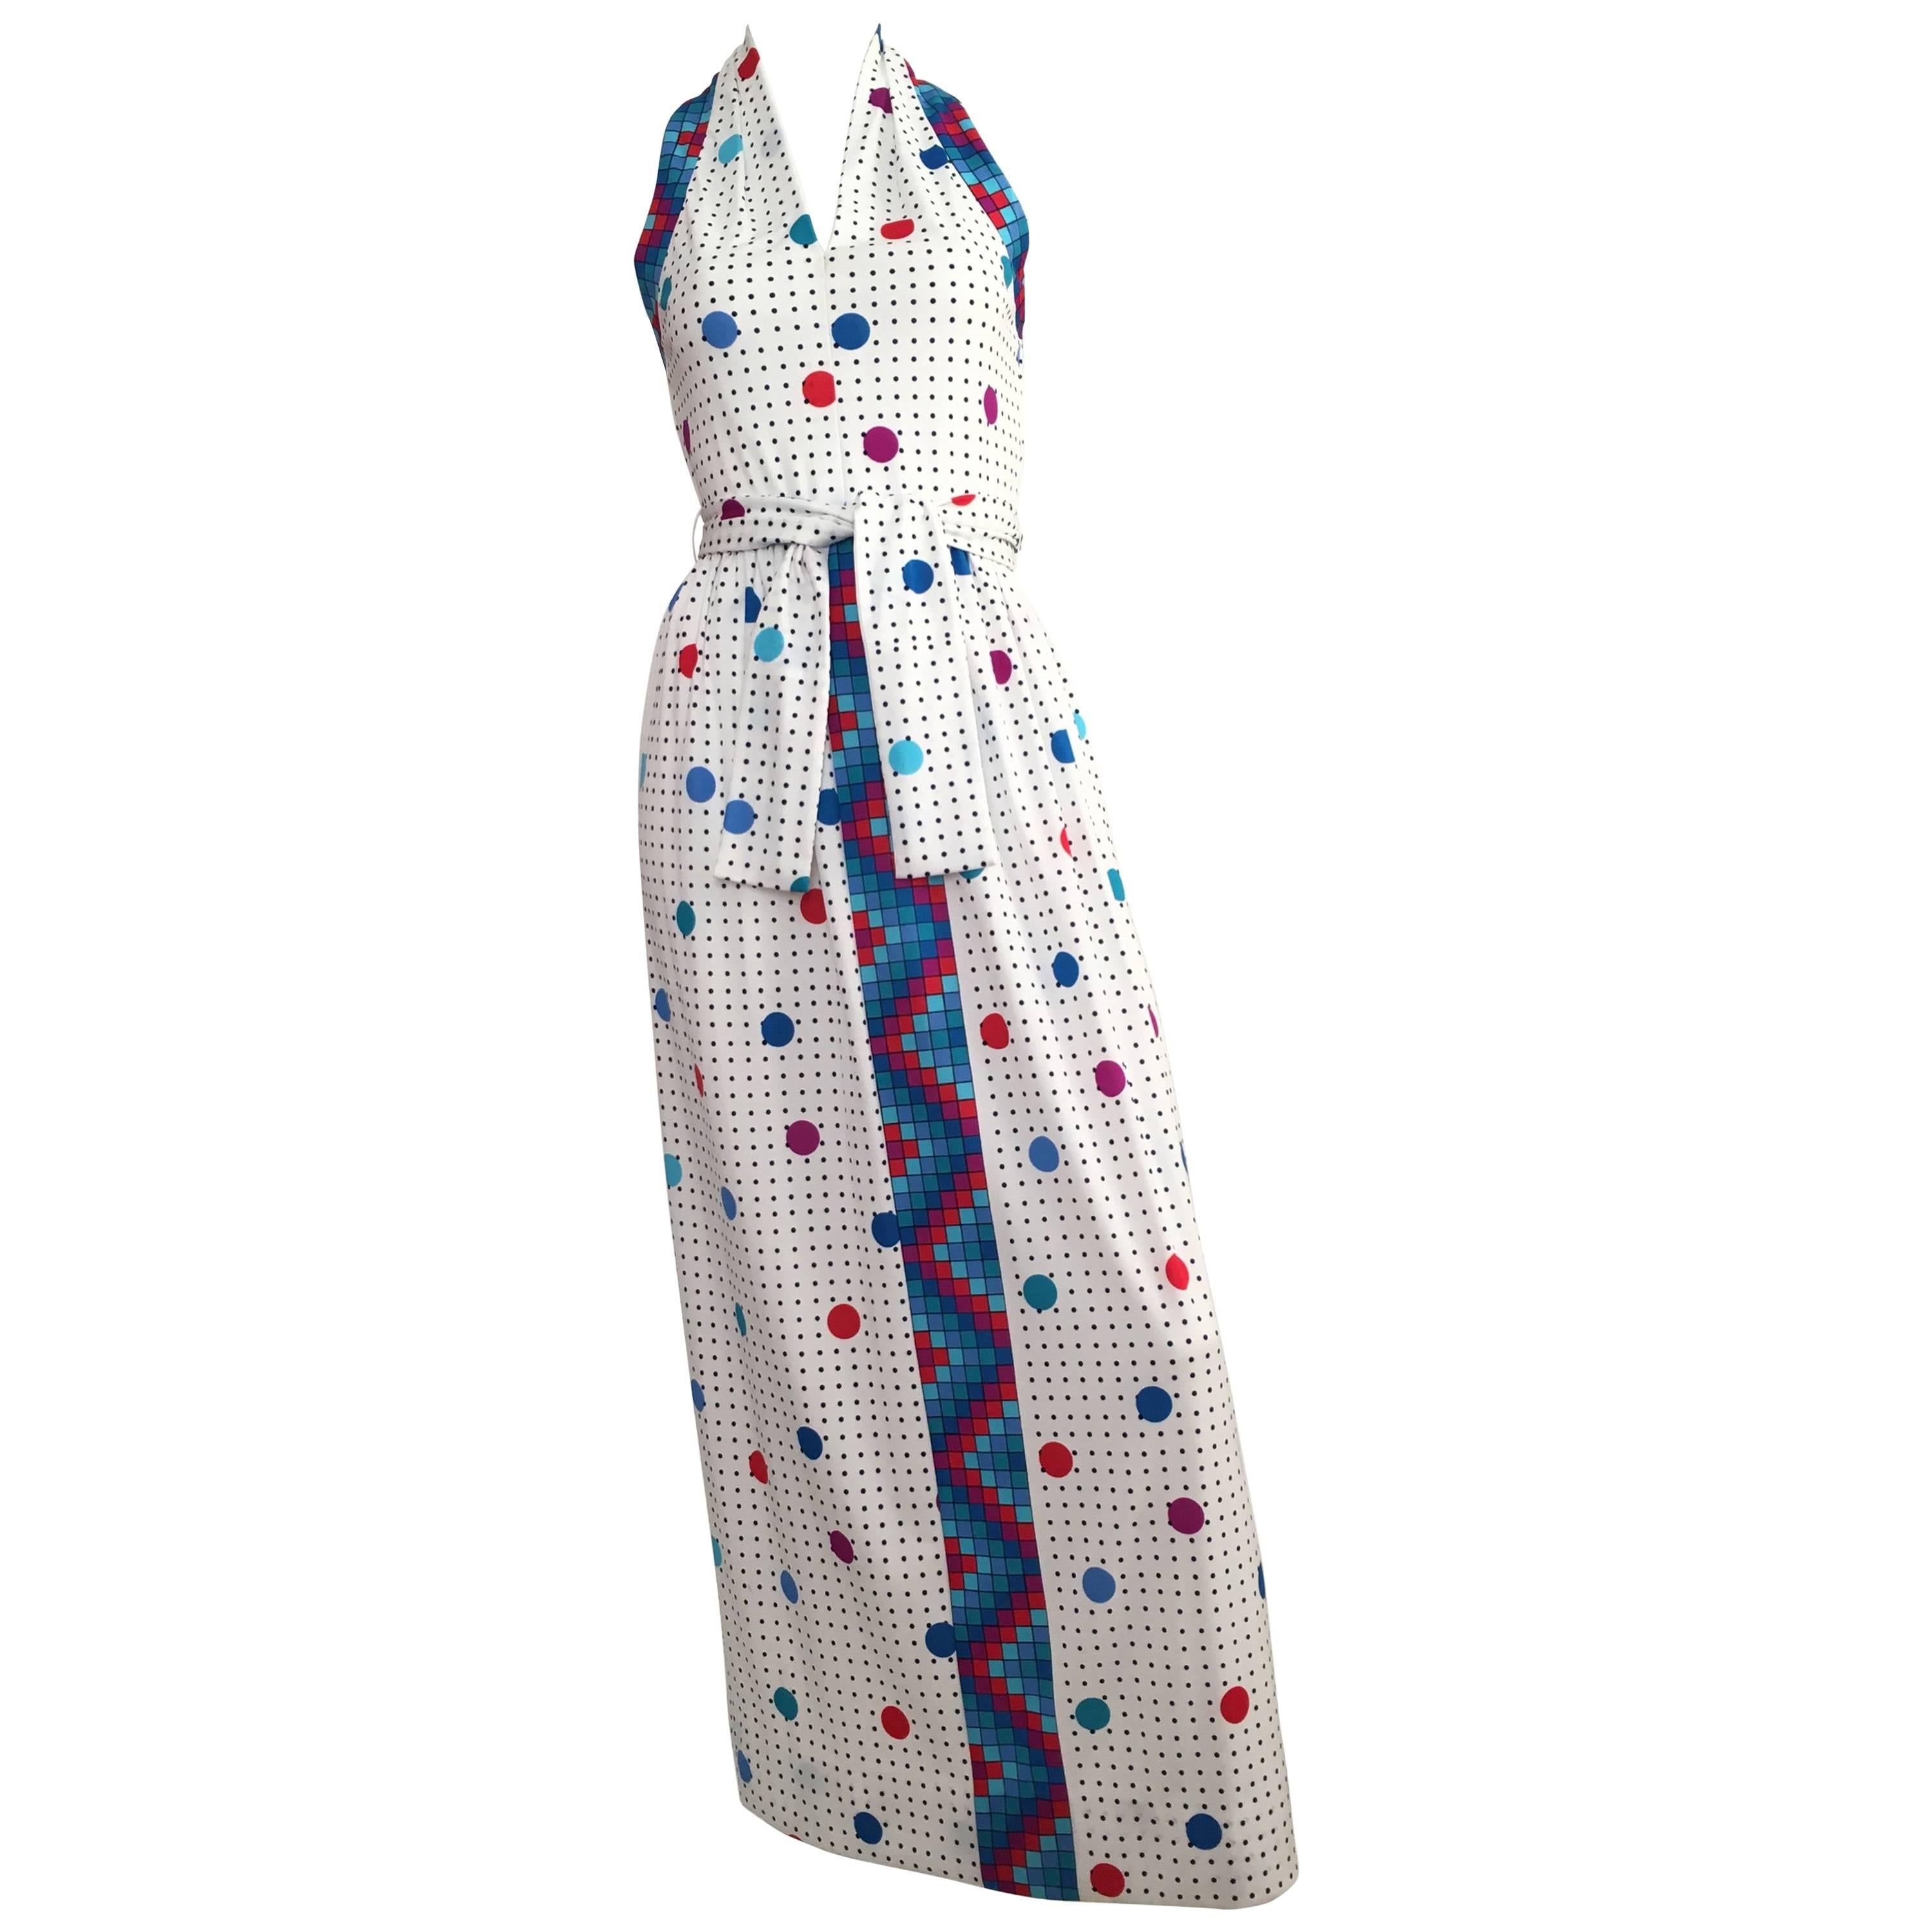 Anne Fogarty Pop Art Maxi Dress Size 4. For Sale